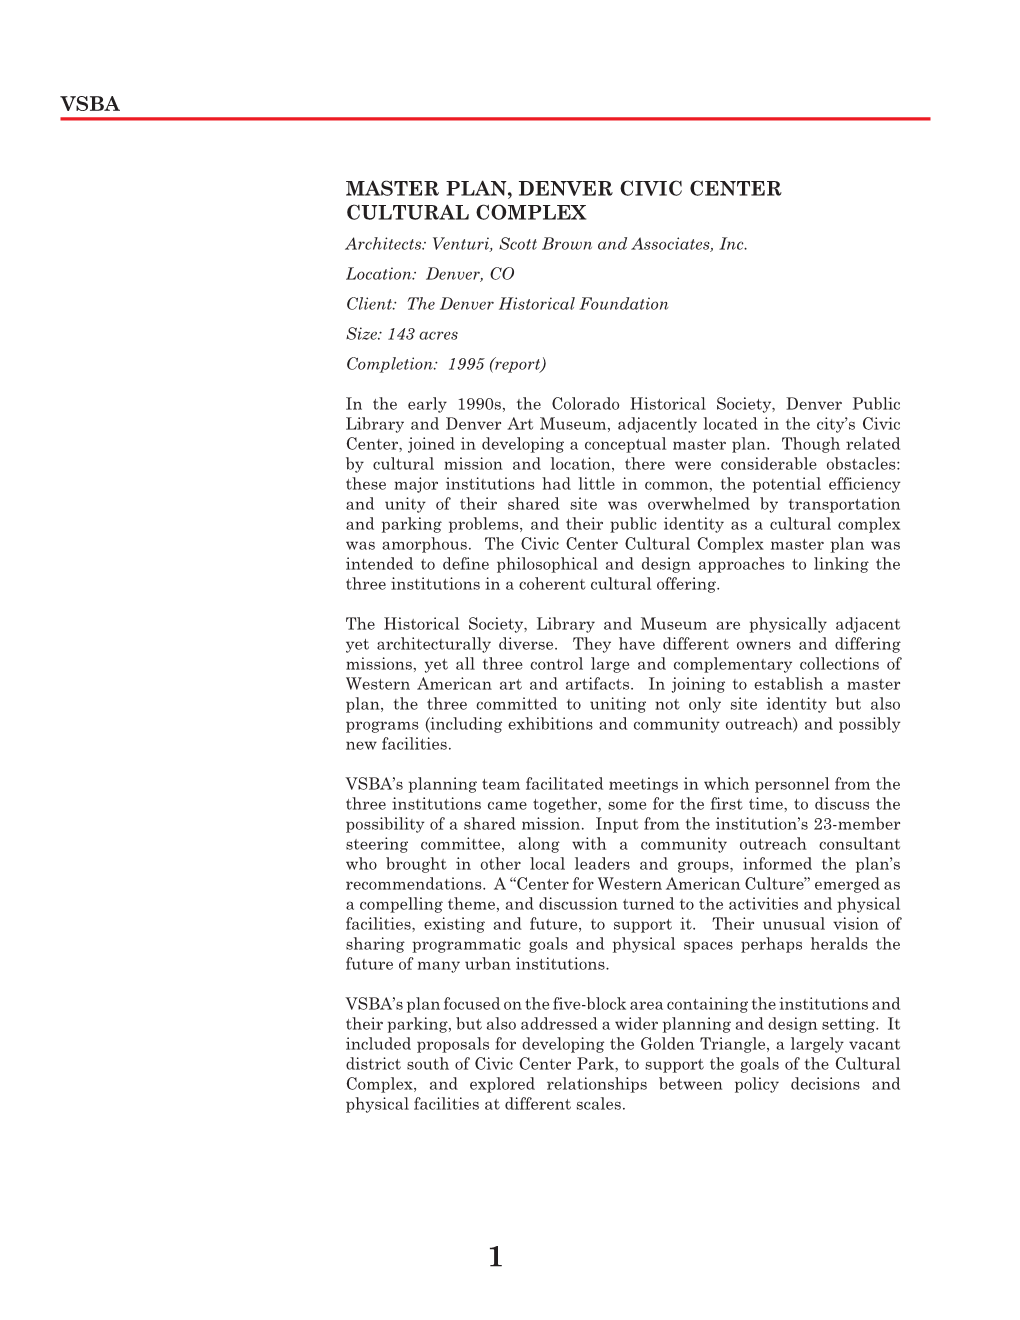 DENVER CIVIC CENTER CULTURAL COMPLEX Architects: Venturi, Scott Brown and Associates, Inc